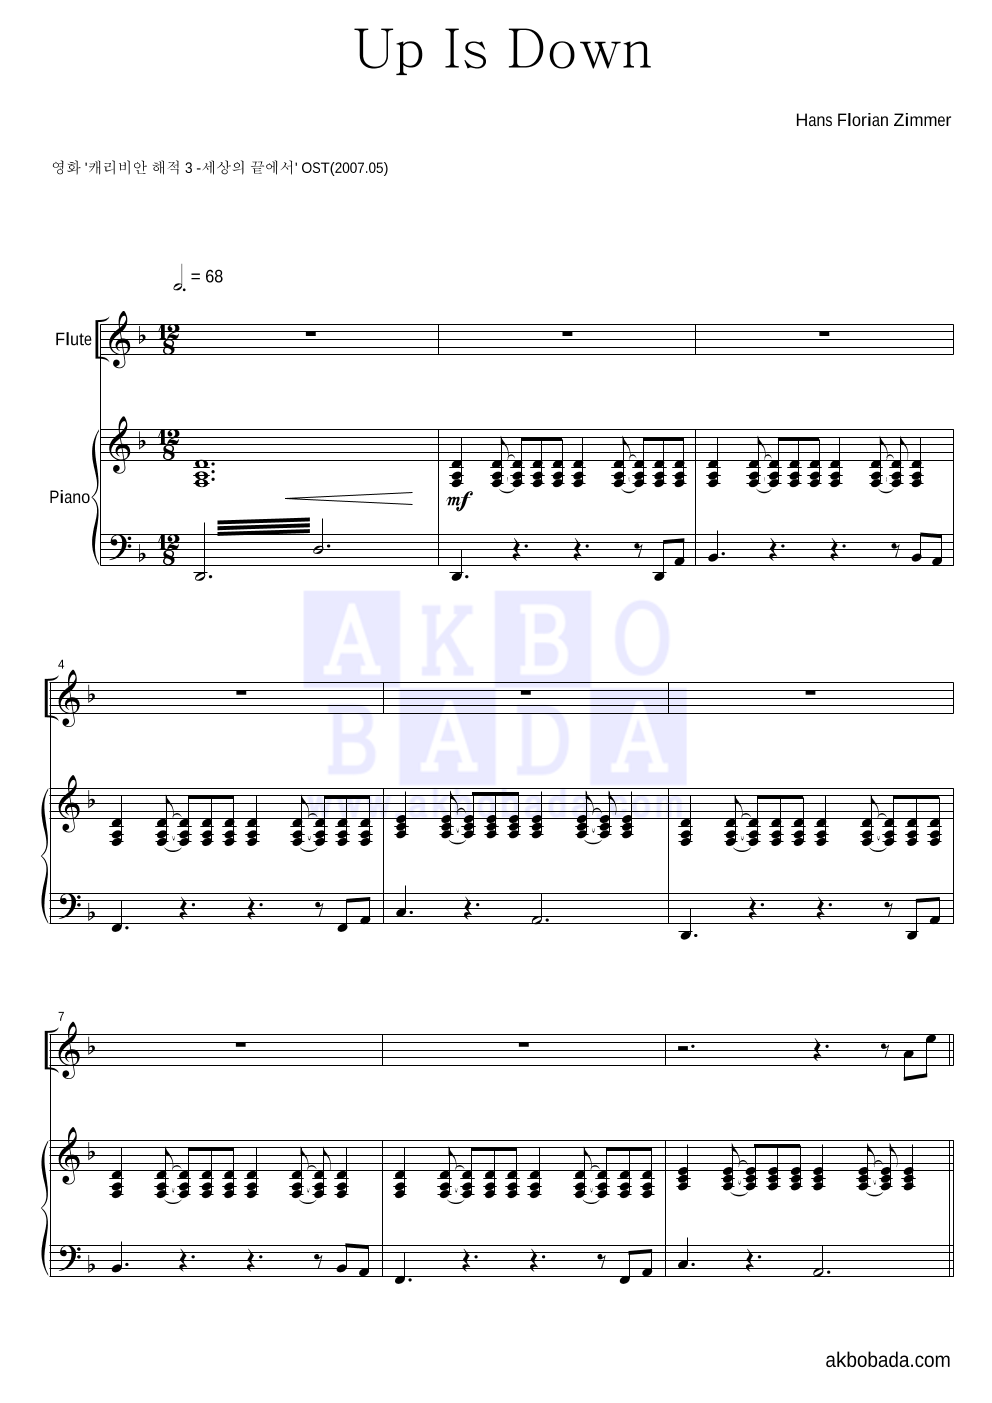 Hans Zimmer - Up Is Down 플룻&피아노 악보 